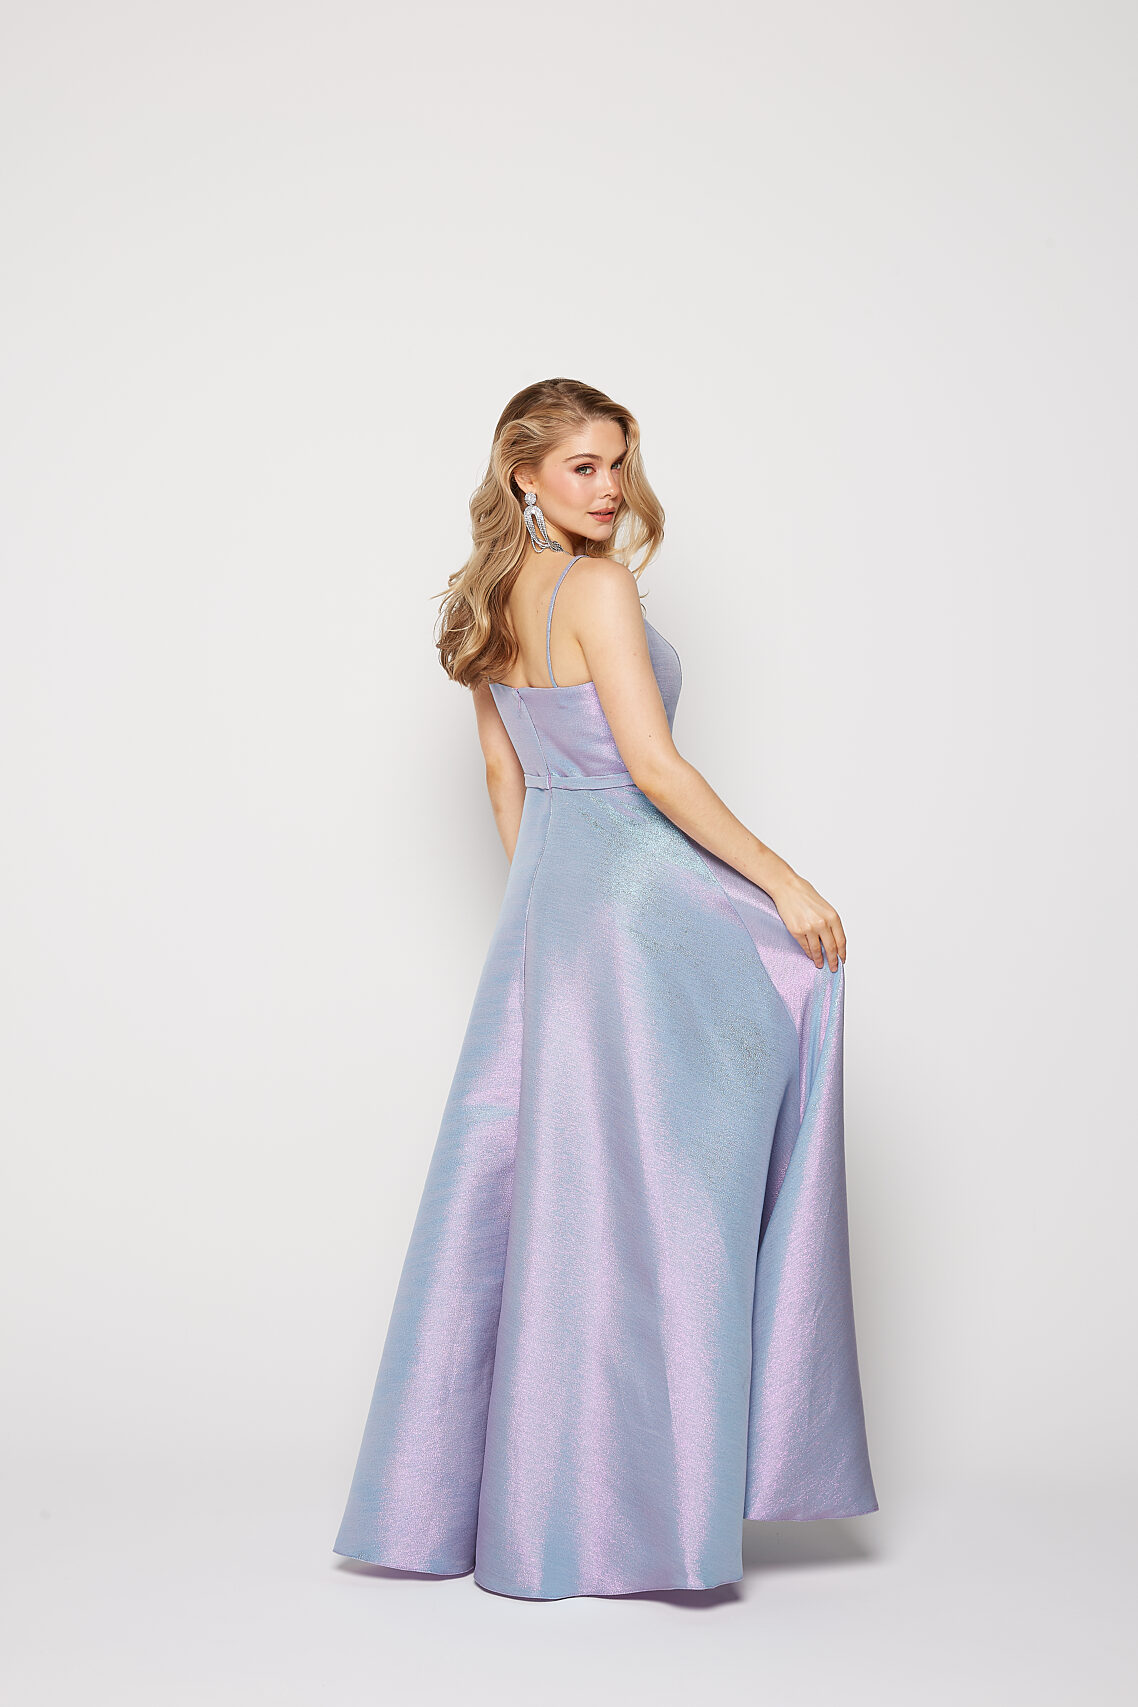 Apollo Formal Dress PO953 | Tania Olsen Designs